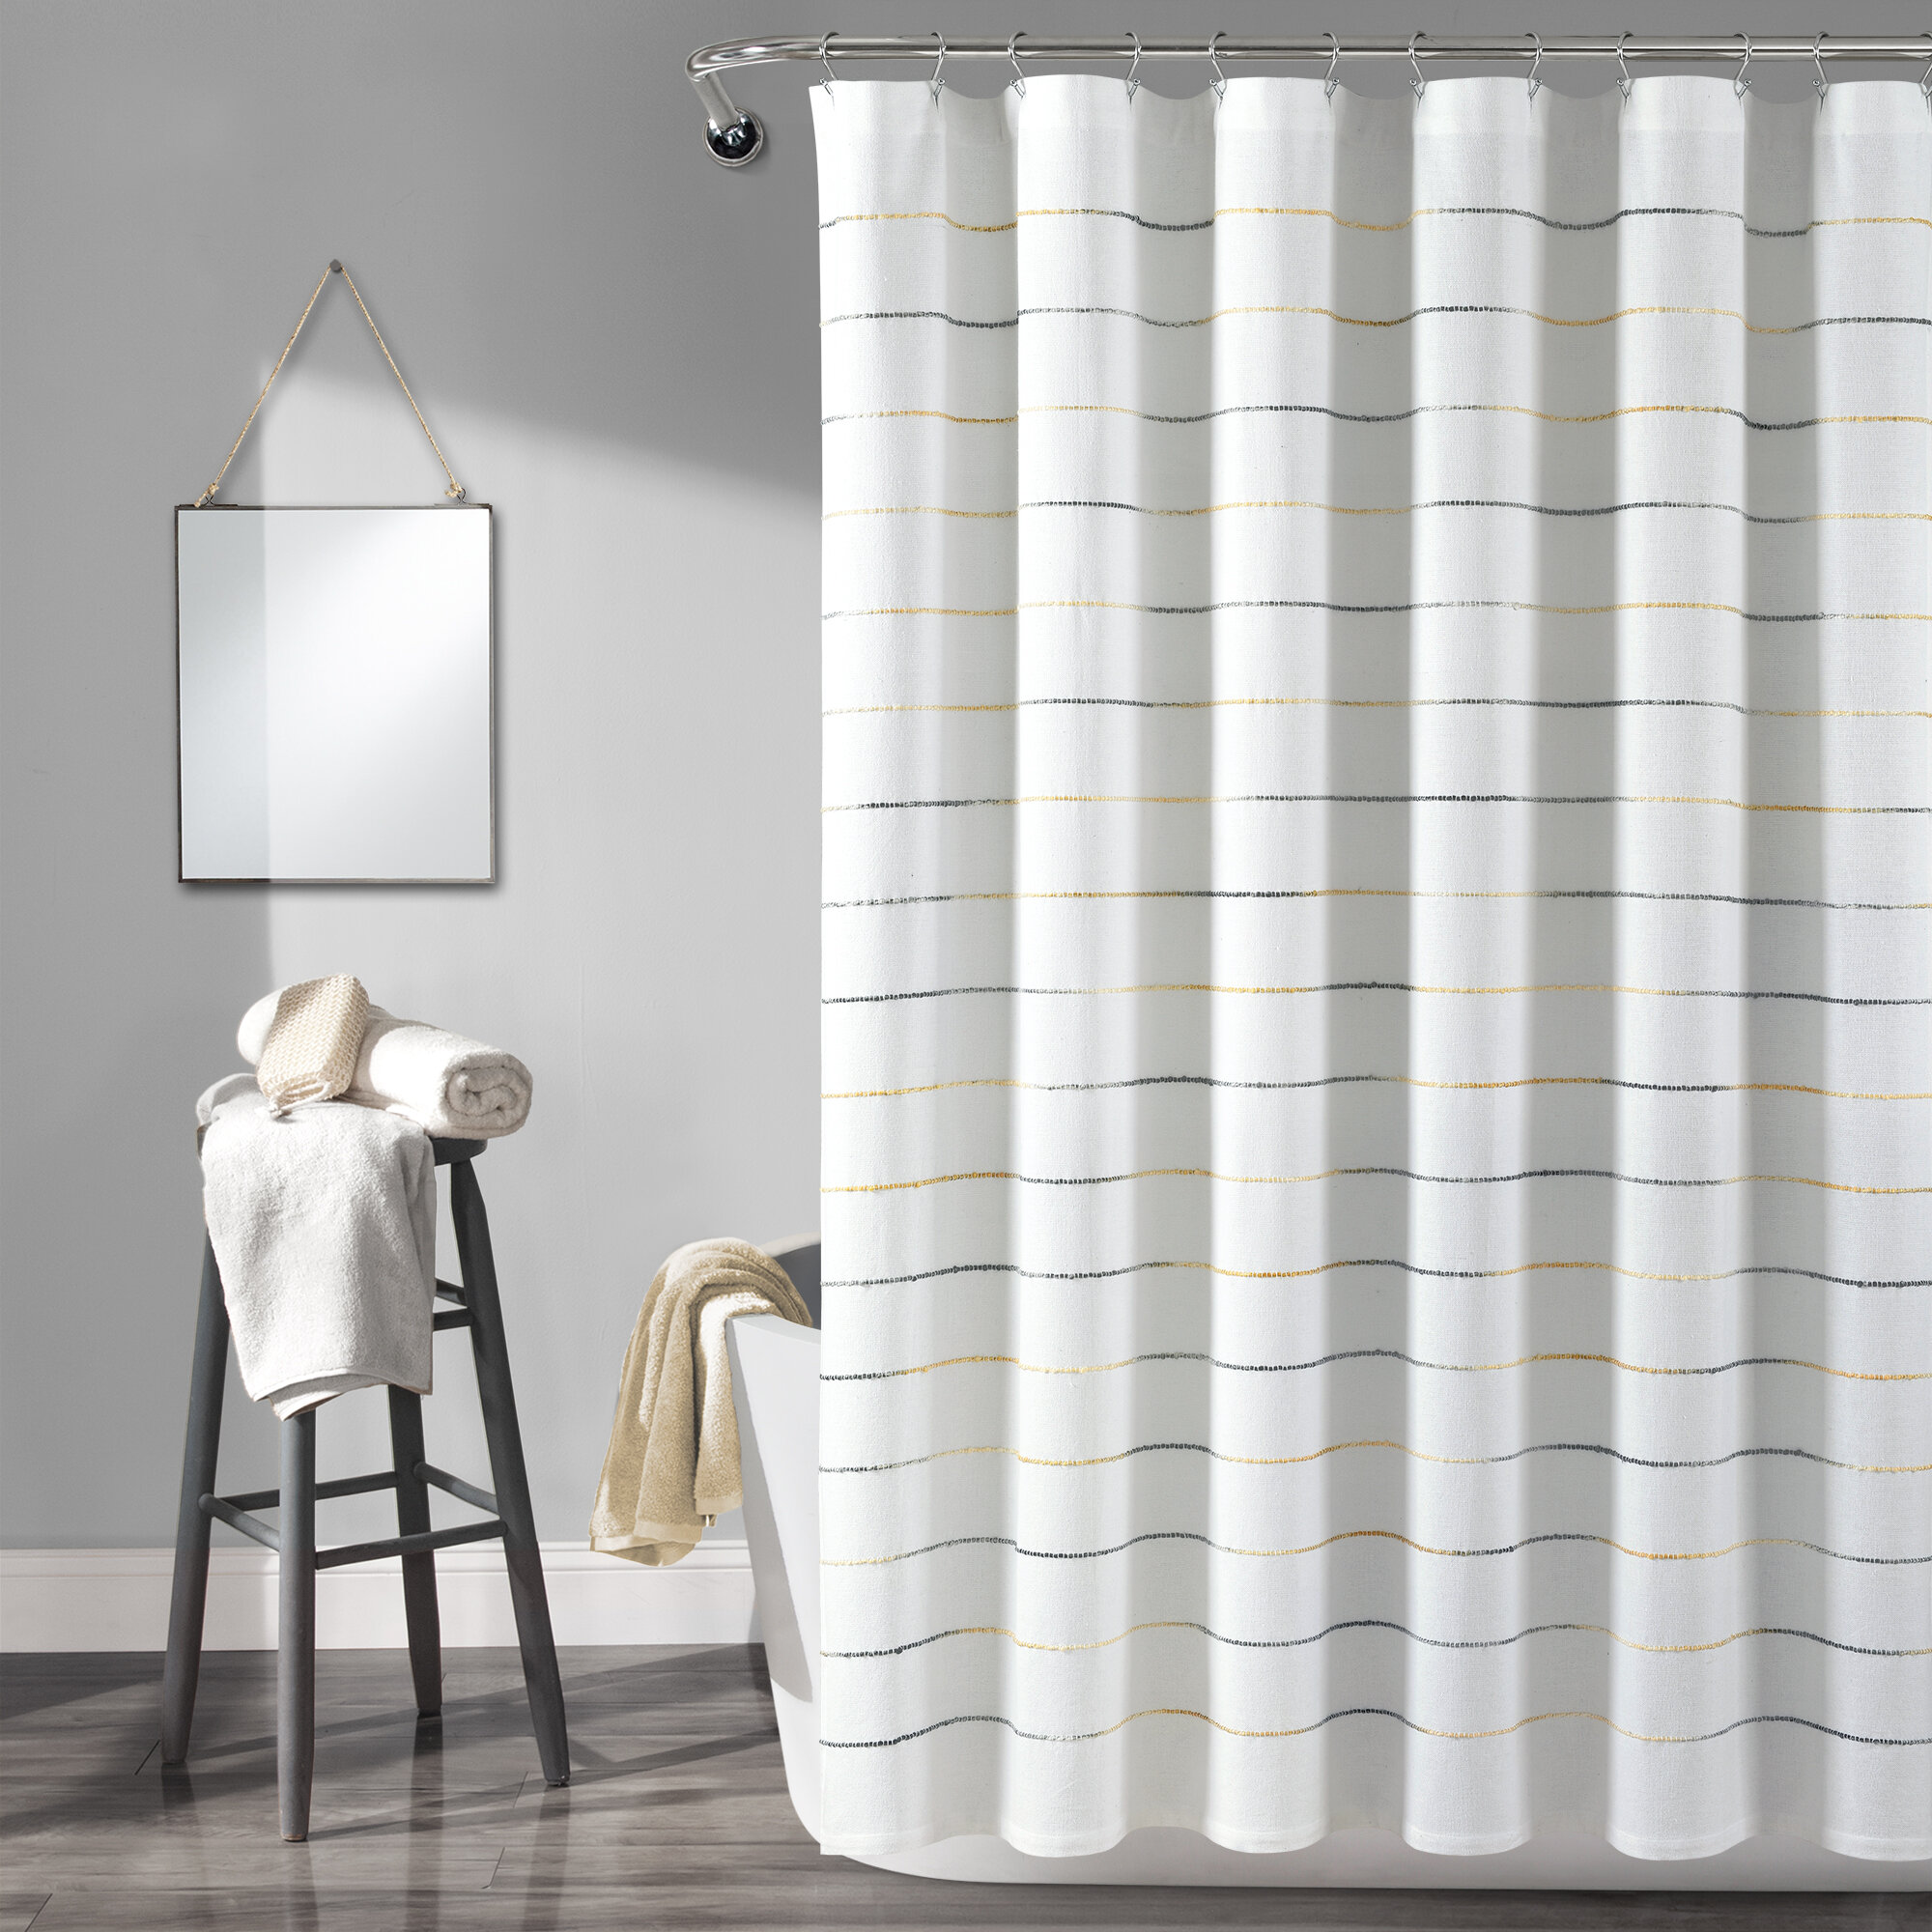 Yellow and Grey Chevron Pattern Shower Curtain Liner Bath Mat Waterproof Fabric